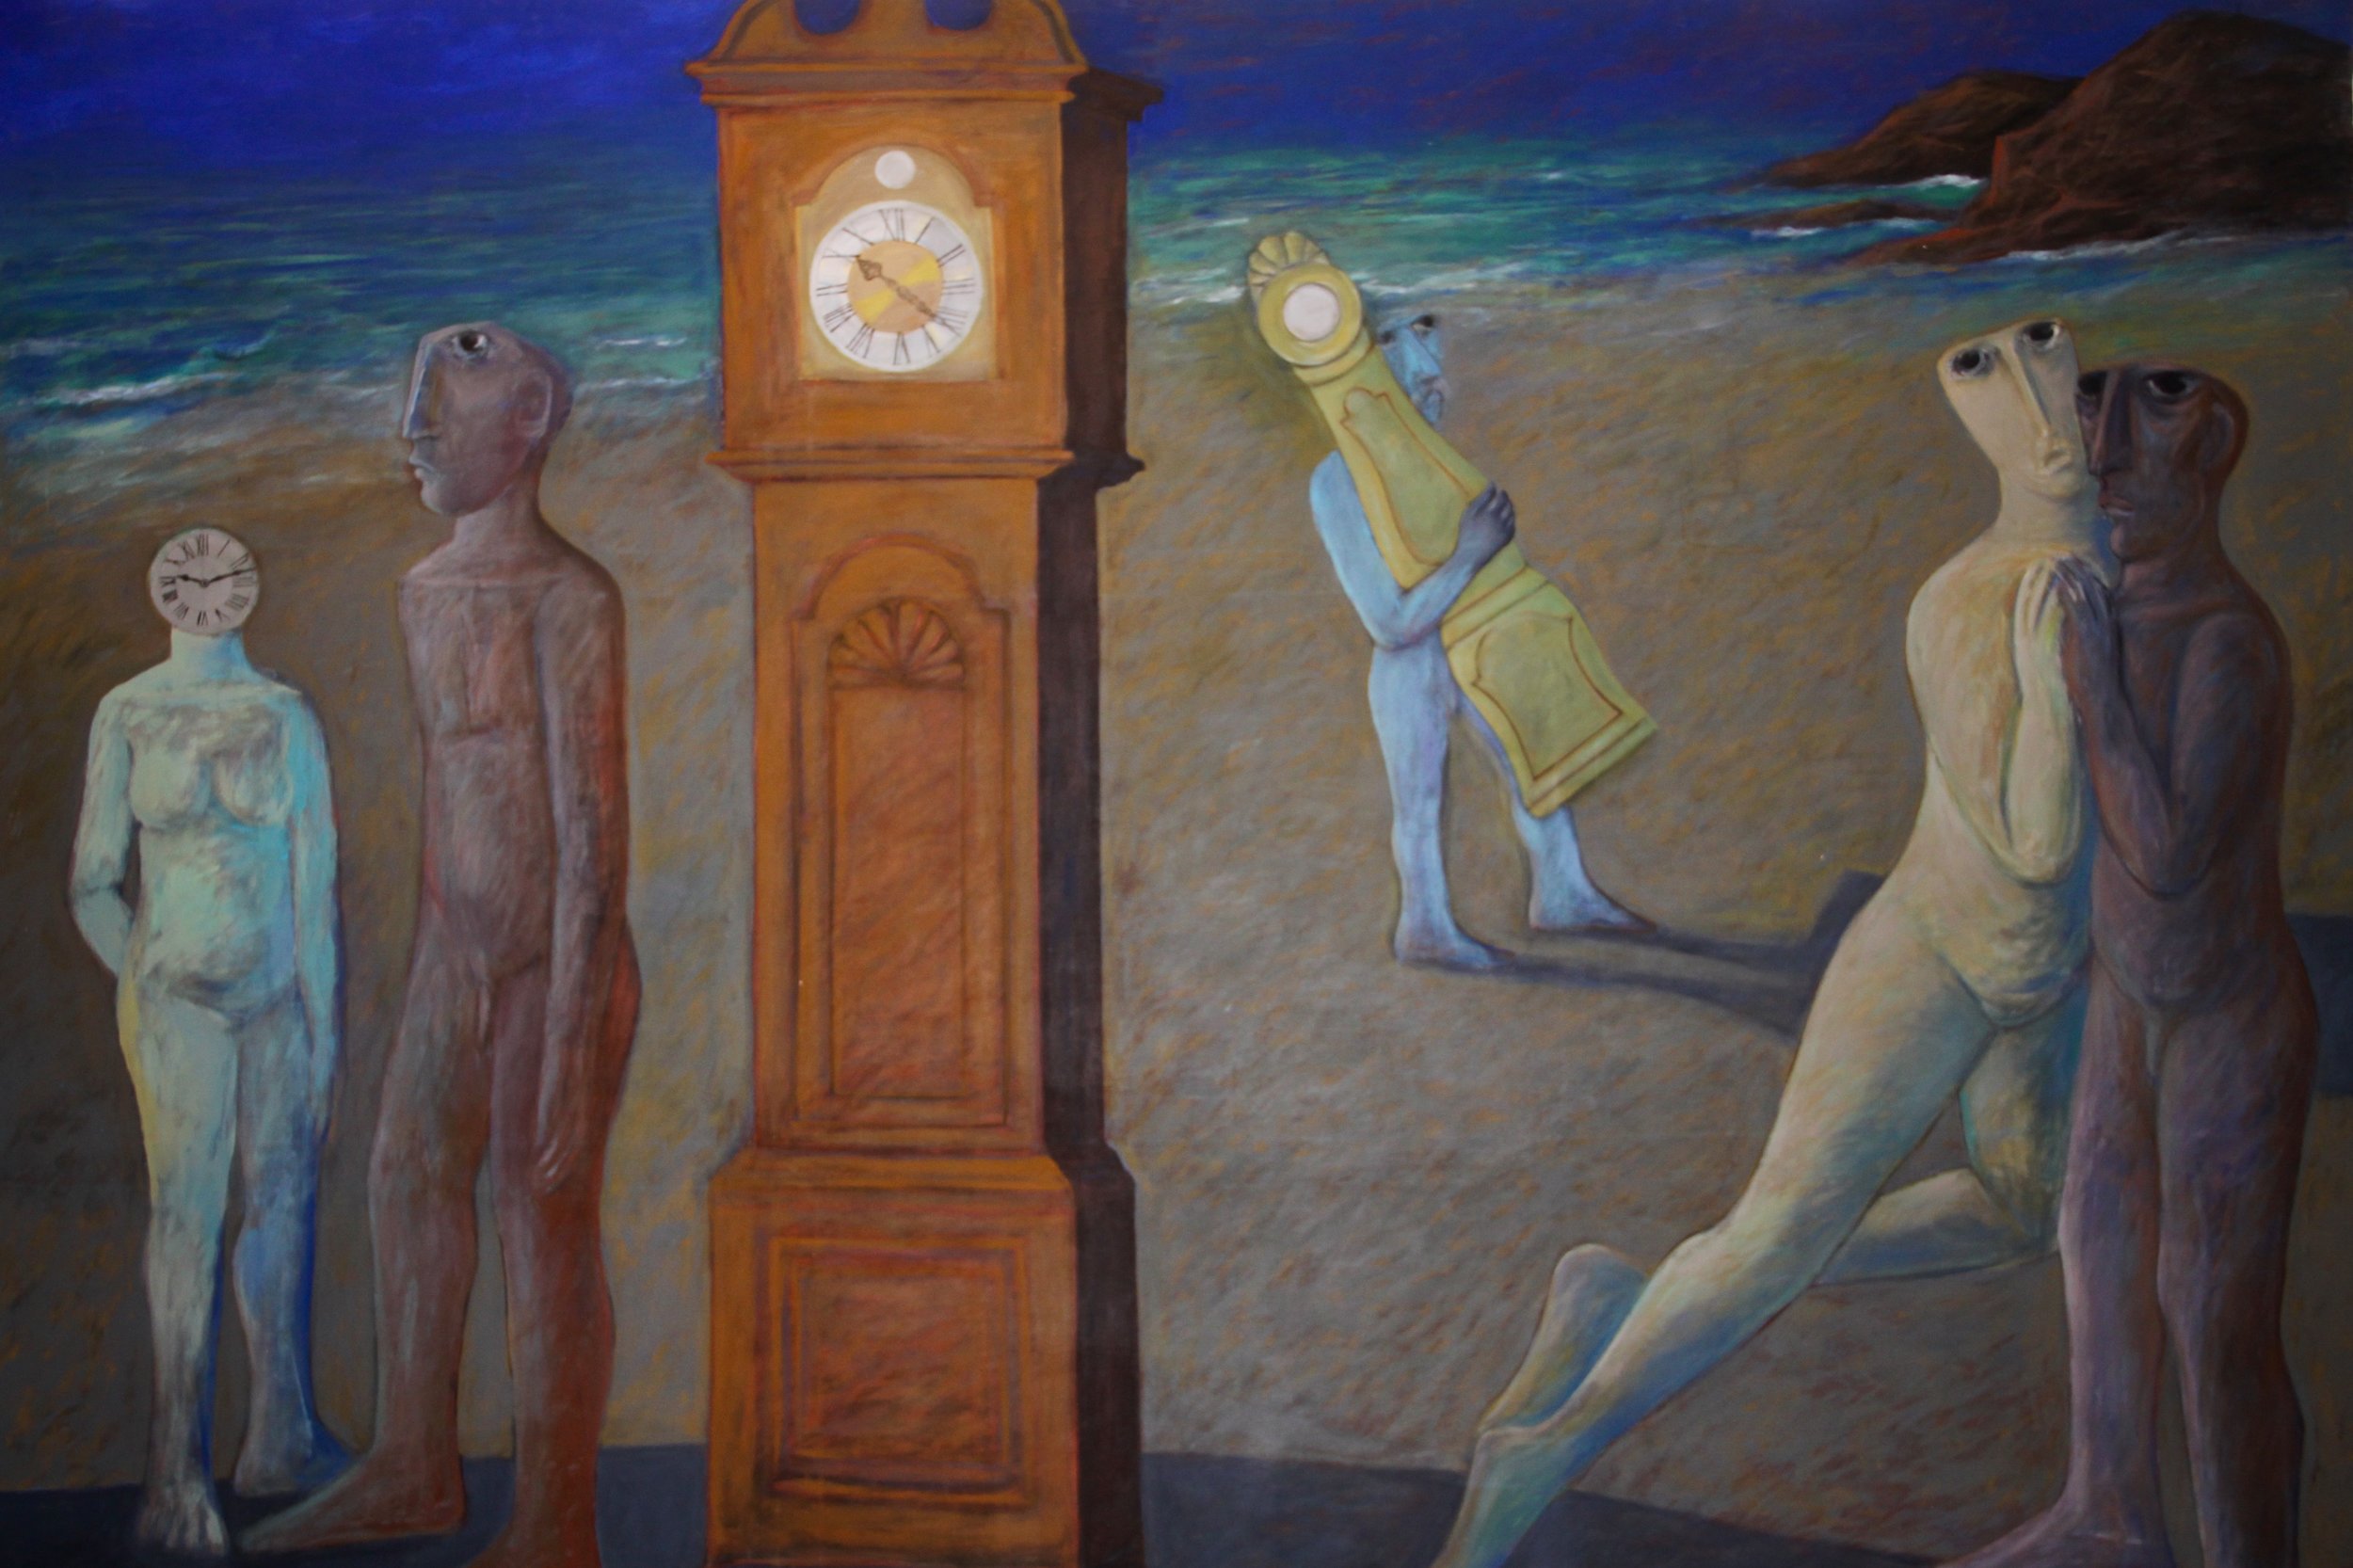  Clocks II, 1998,  Acrylic on canvas, 209 x 305 cm 